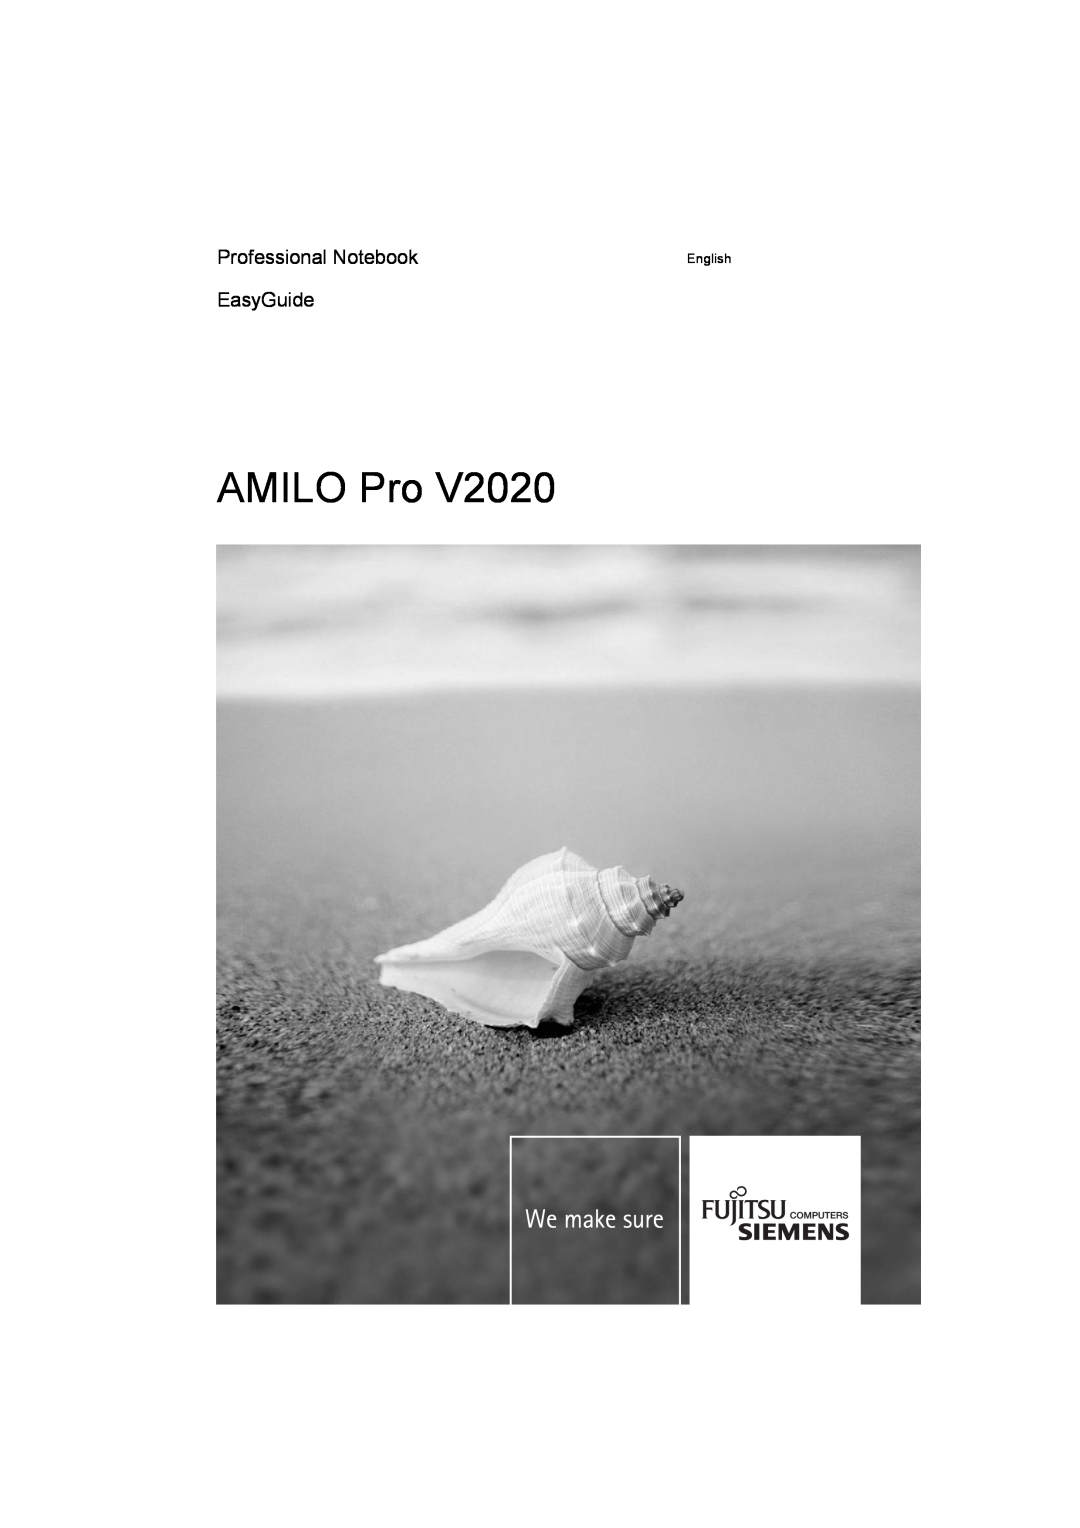 Fujitsu Siemens Computers V2020 manual Professional Notebook EasyGuide, AMILO Pro, English 